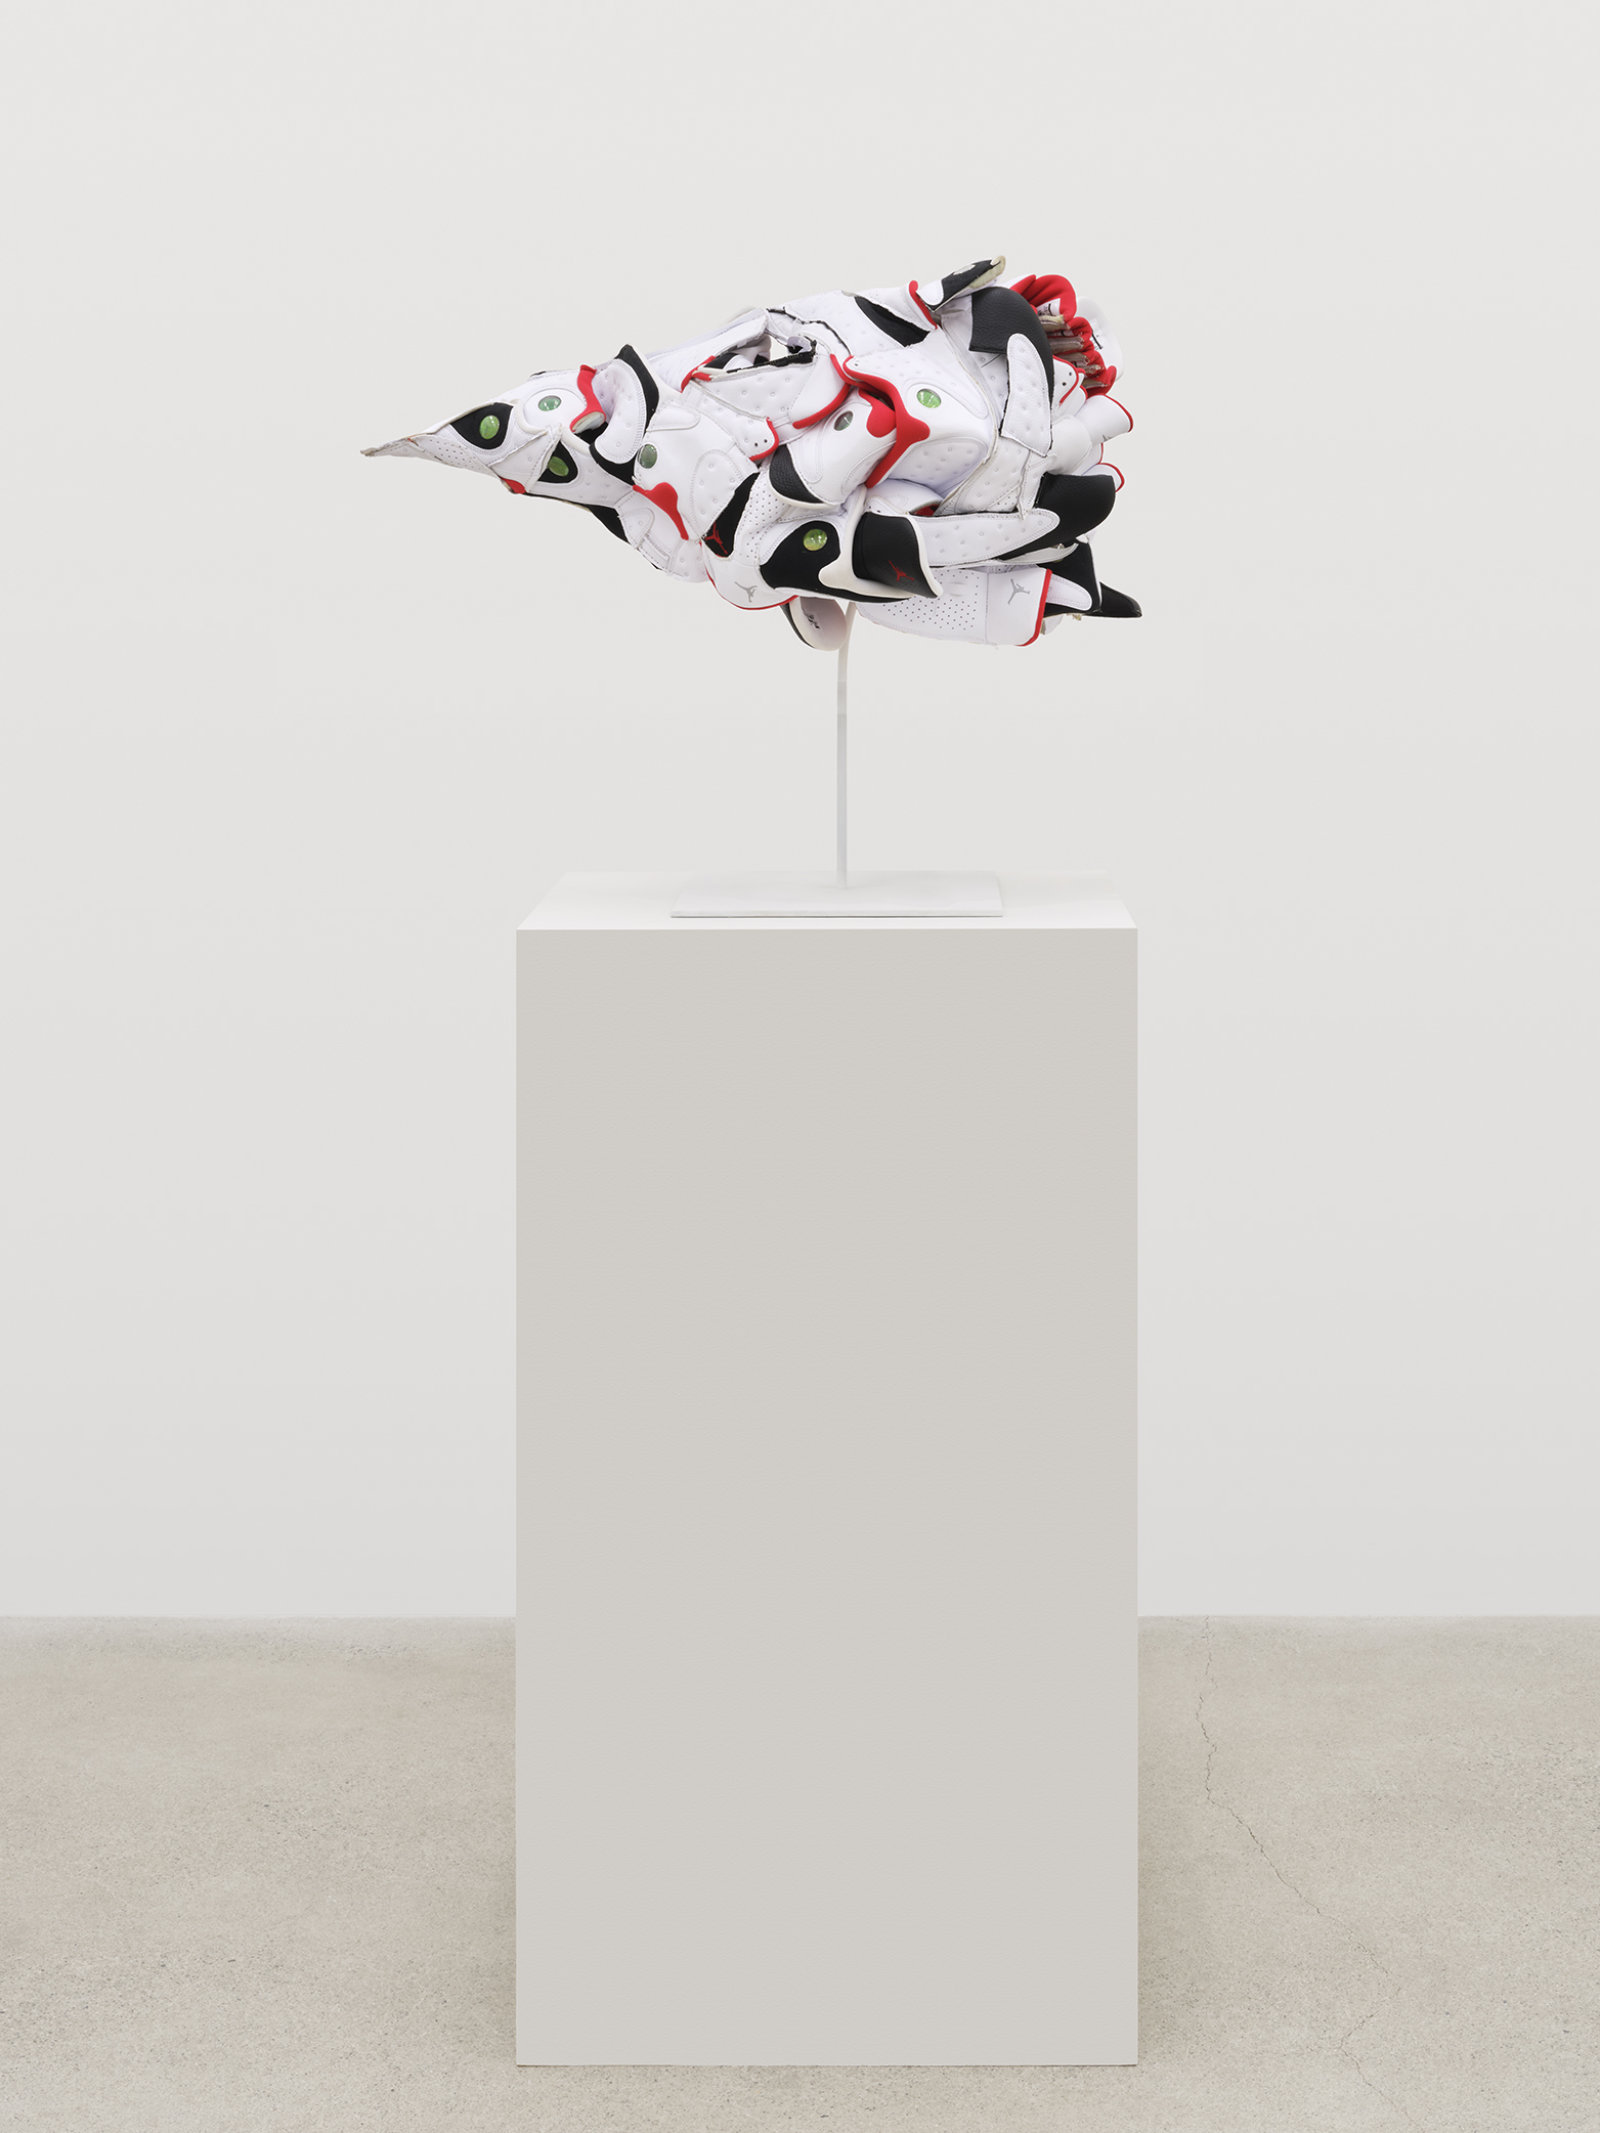 Brian Jungen, Plague Mask 3 (fever dream), 2020, nike air jordans, 17 x 15 x 32 in. (43 x 38 x 81 cm)